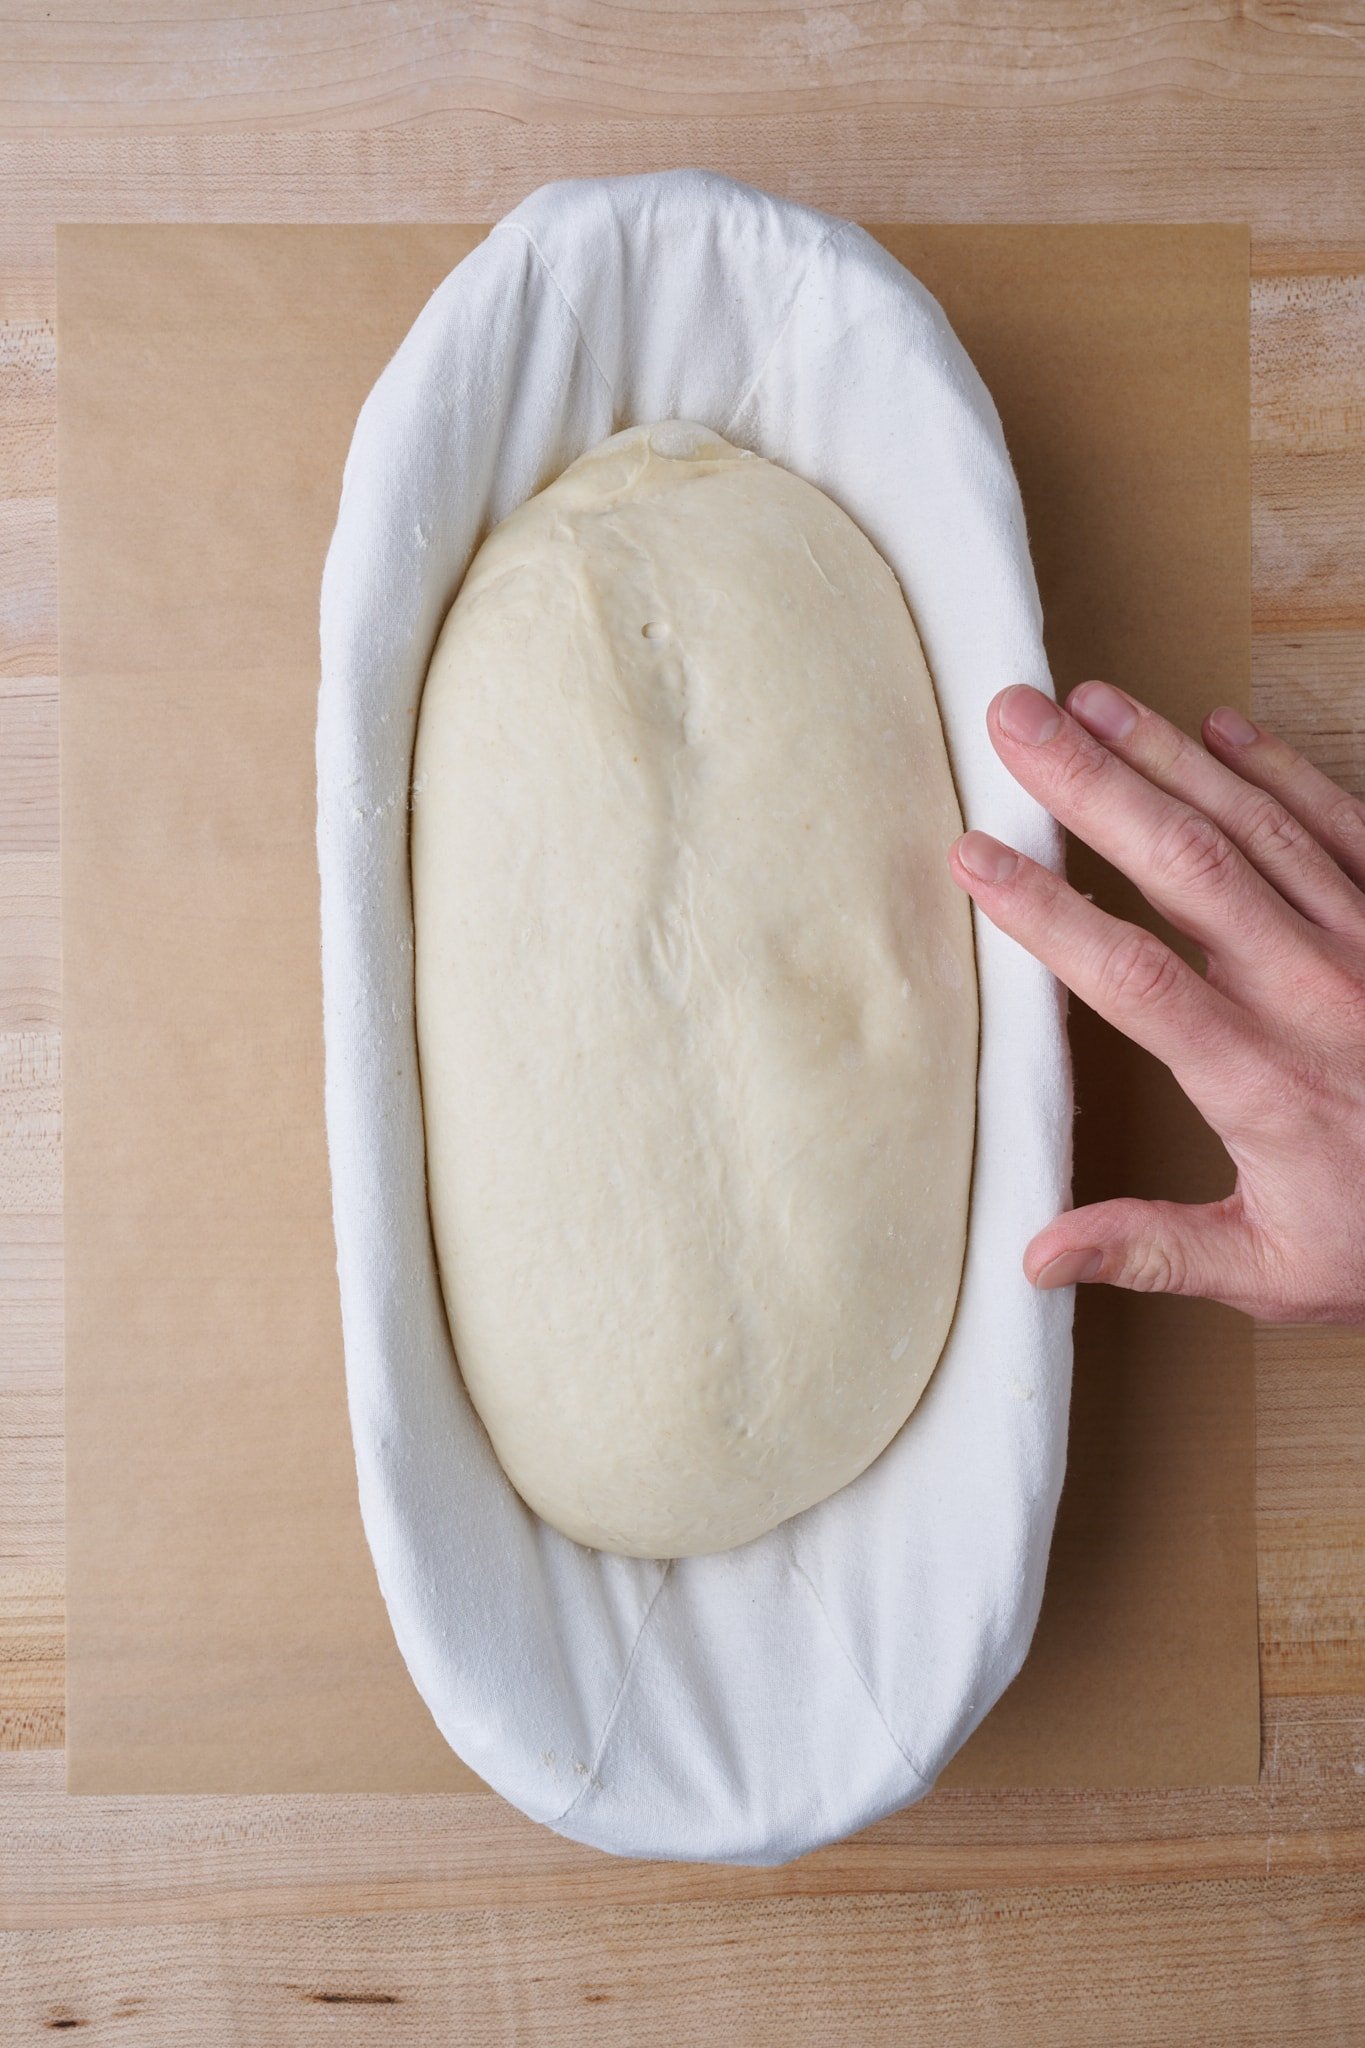 Dough poke test: properly proofed dough